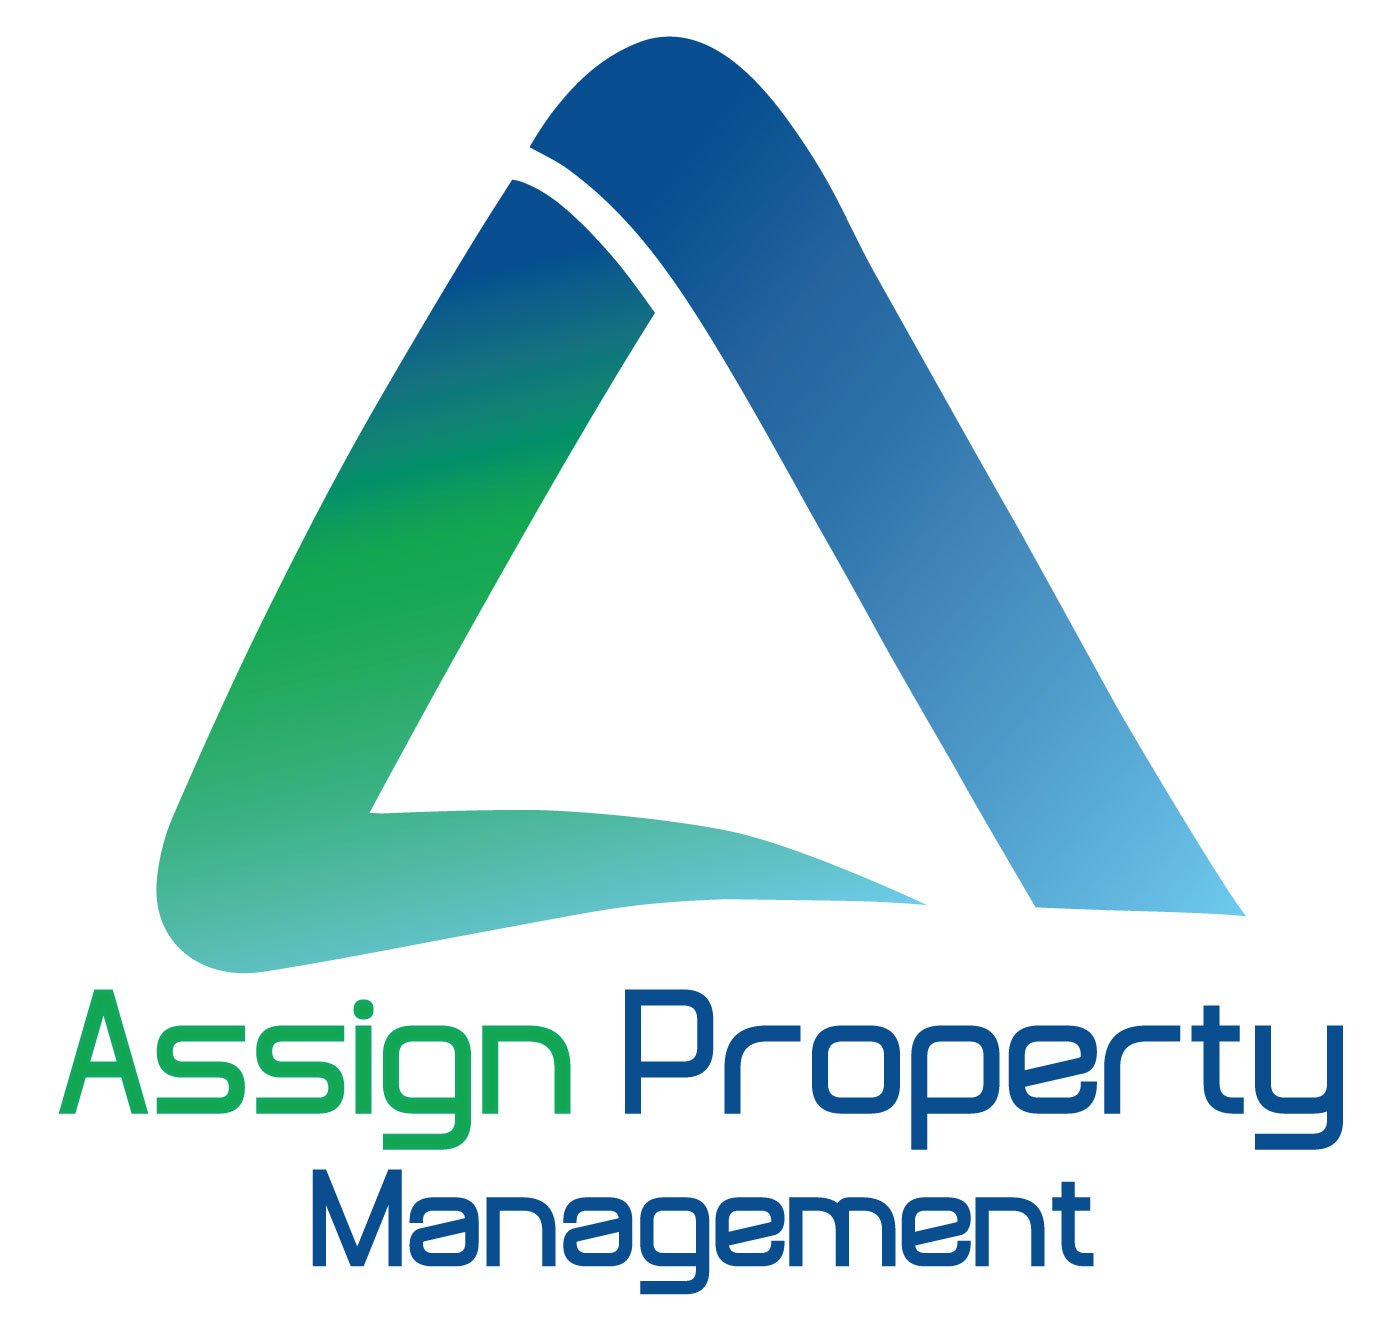 Assign Property Management